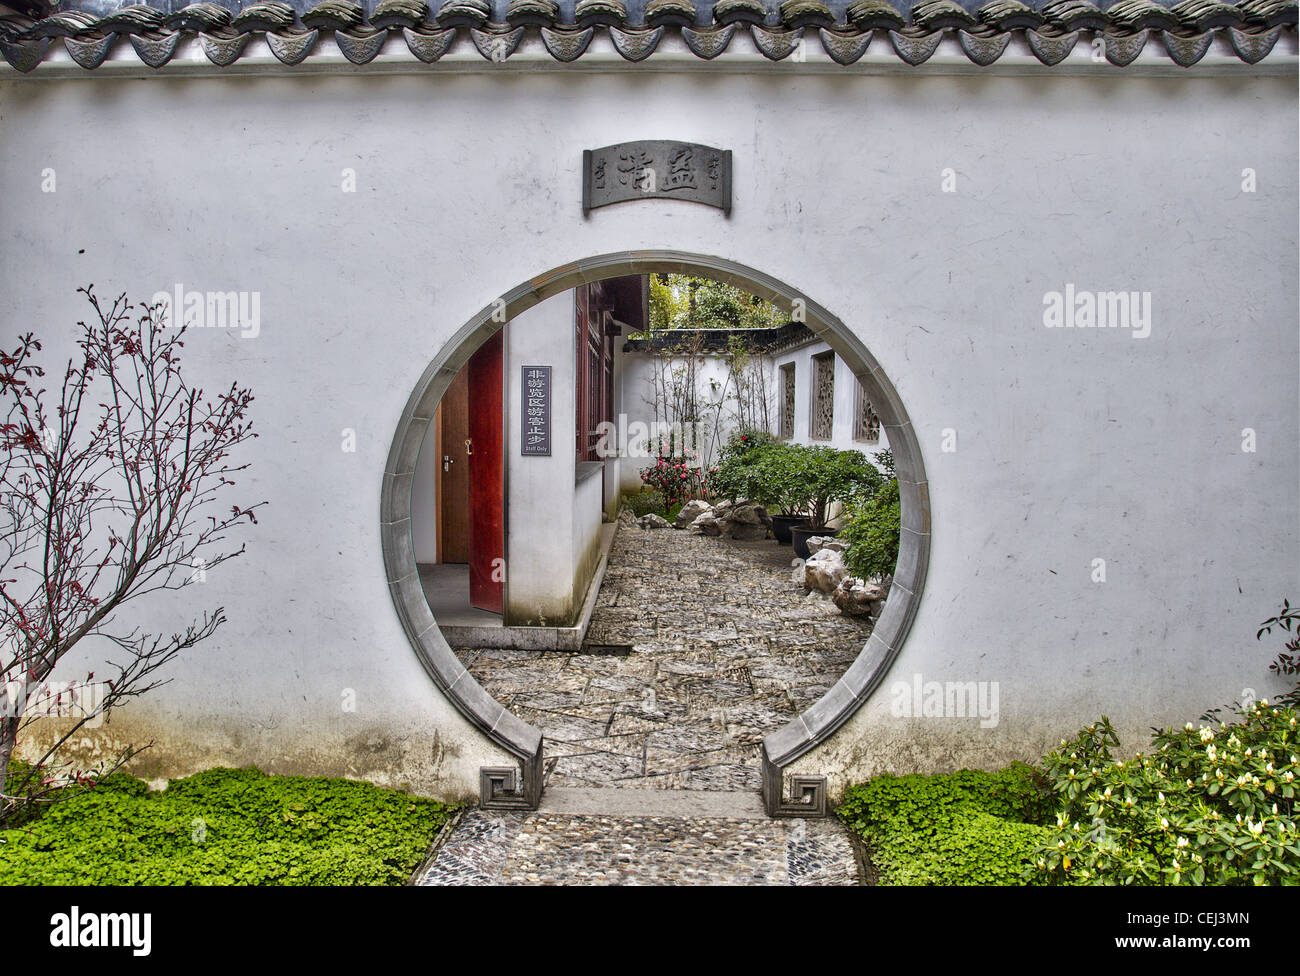 Eine Runde Tür im Humble Administrators Garden - Suzhou (China) Stockfoto